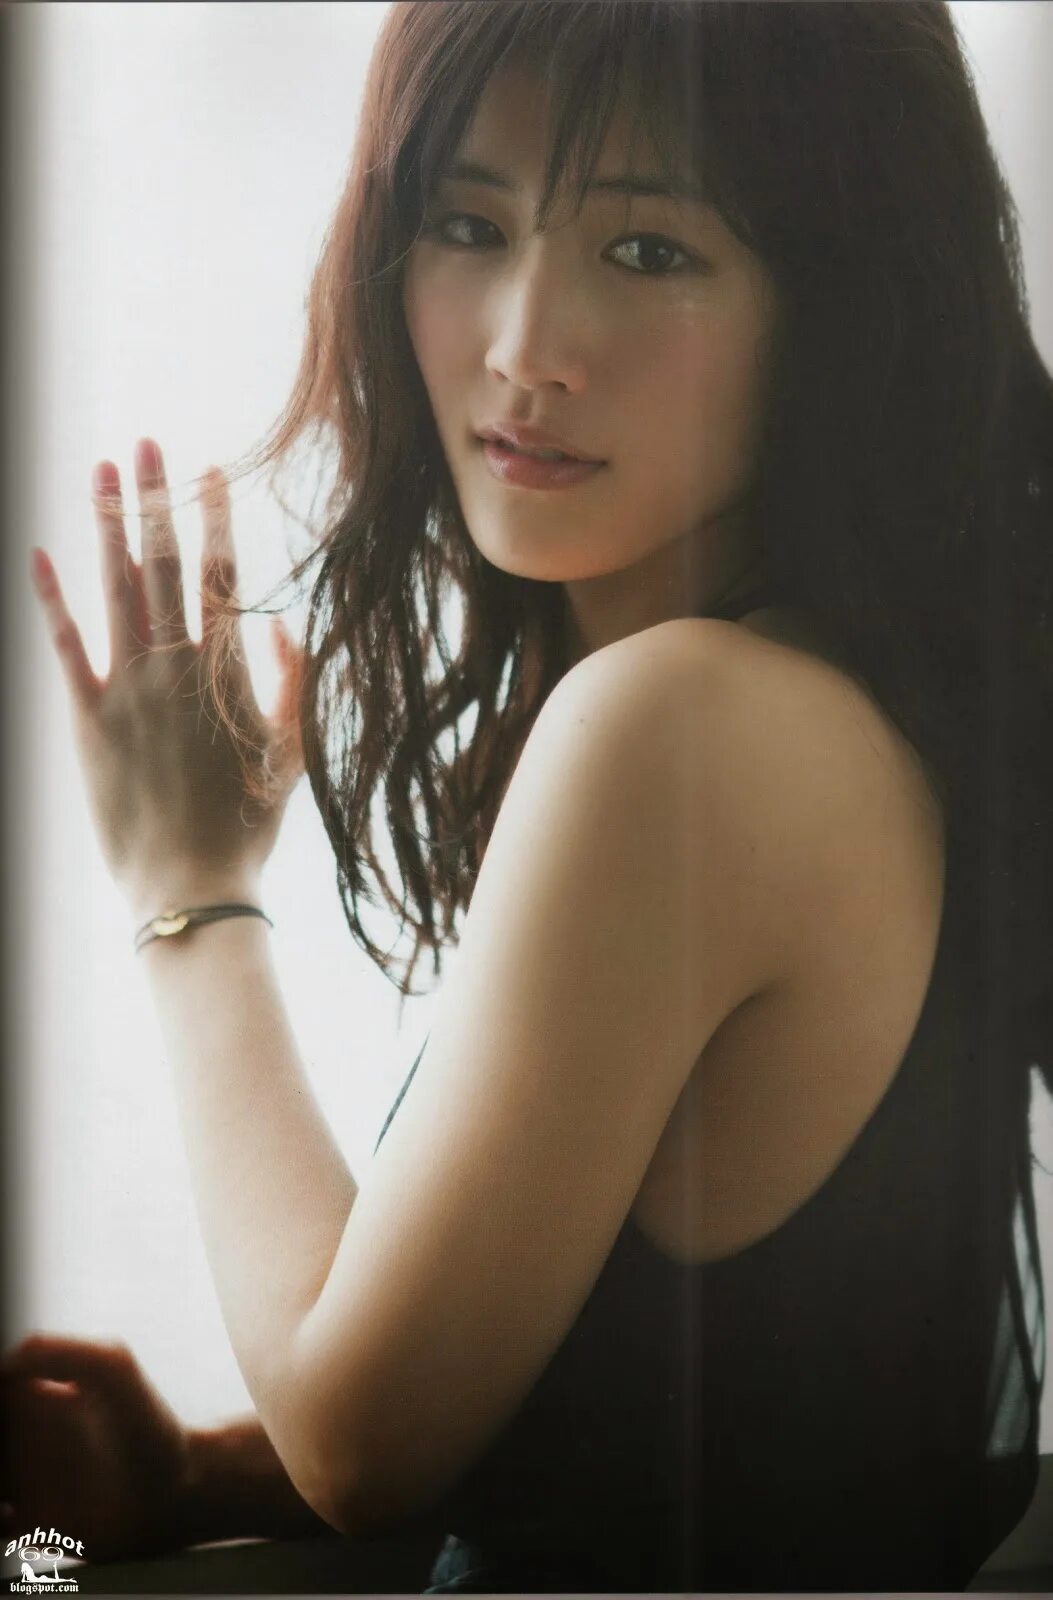 Харука аясэ. Харука Аясэ +18. Девушка 27 лет японка артистка модель Харука. Харука Аясэ в джинсах.